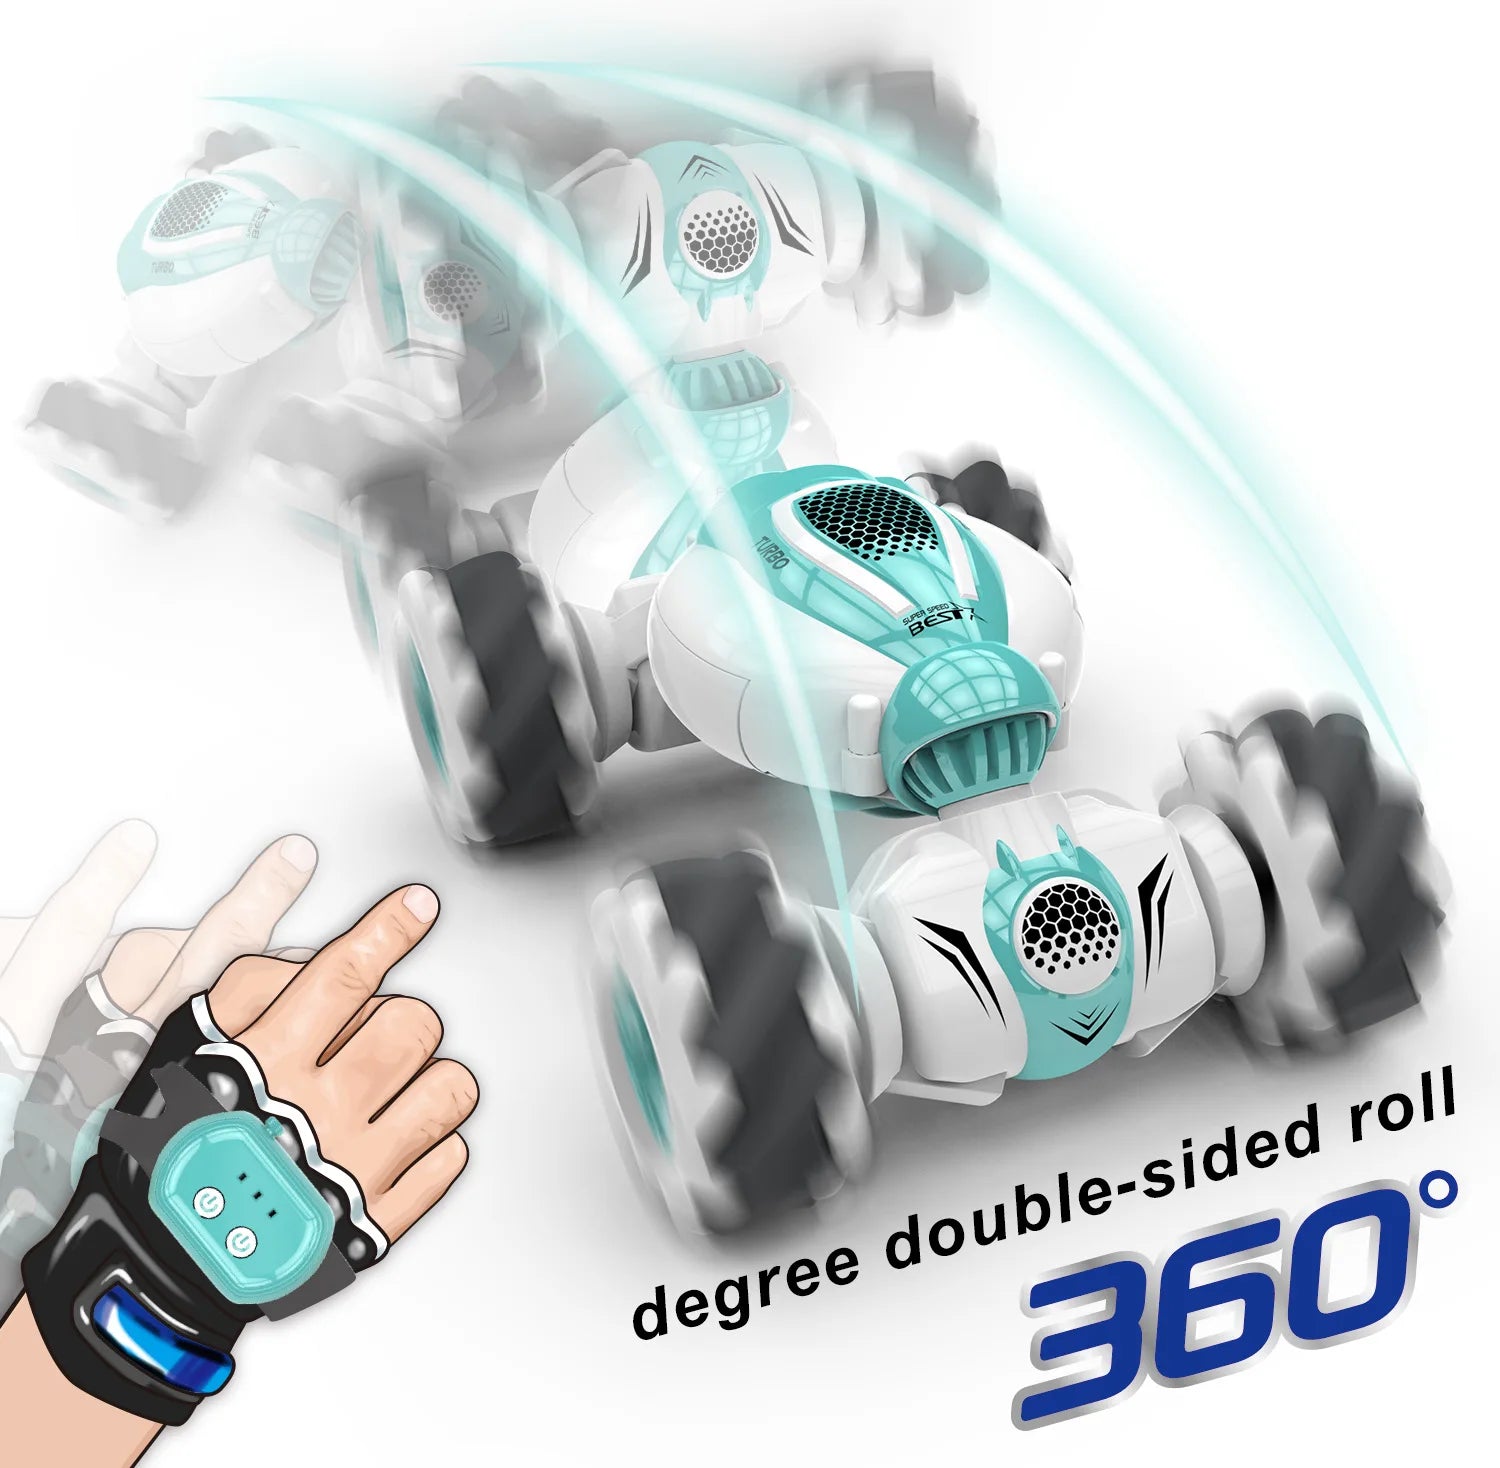 Samll RC Stunt Car, 22 Se3 8 roll double-sided 360